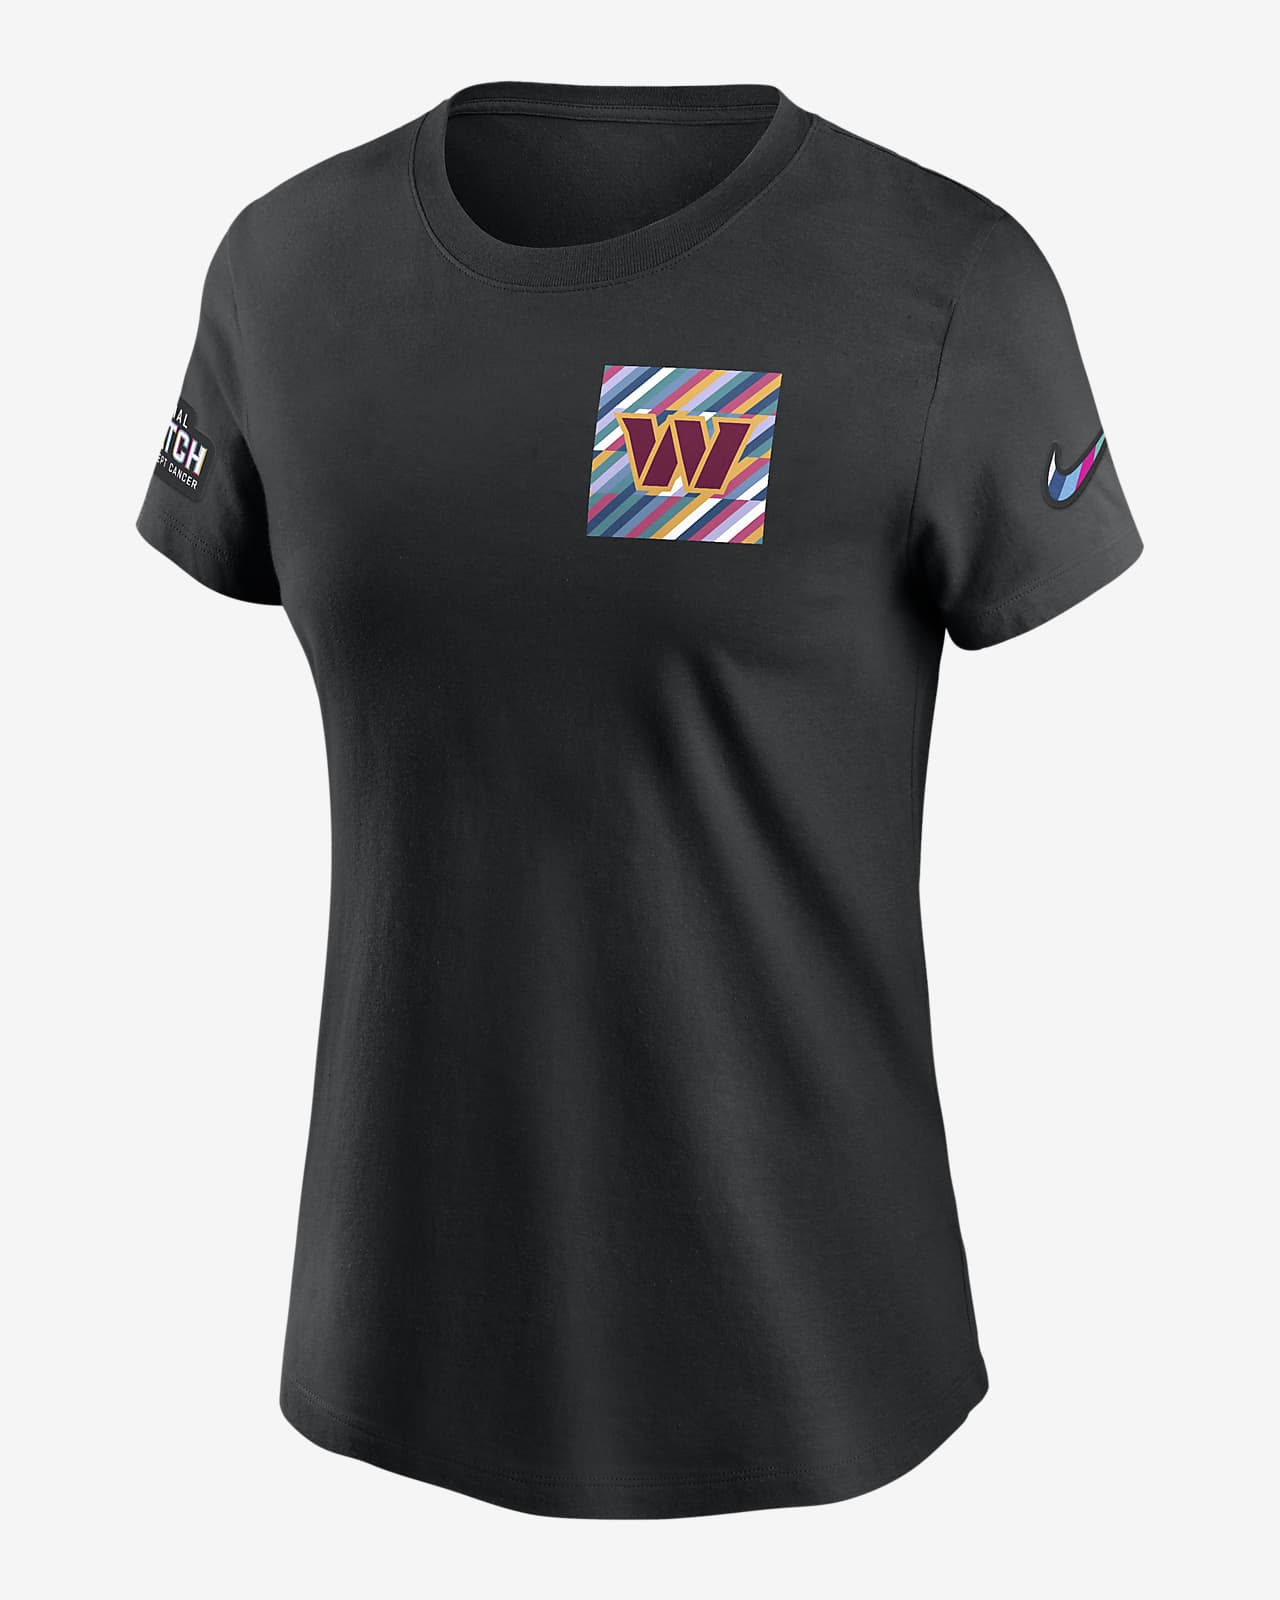 Washington Commanders Crucial Catch Sideline Women's Nike NFL T-Shirt